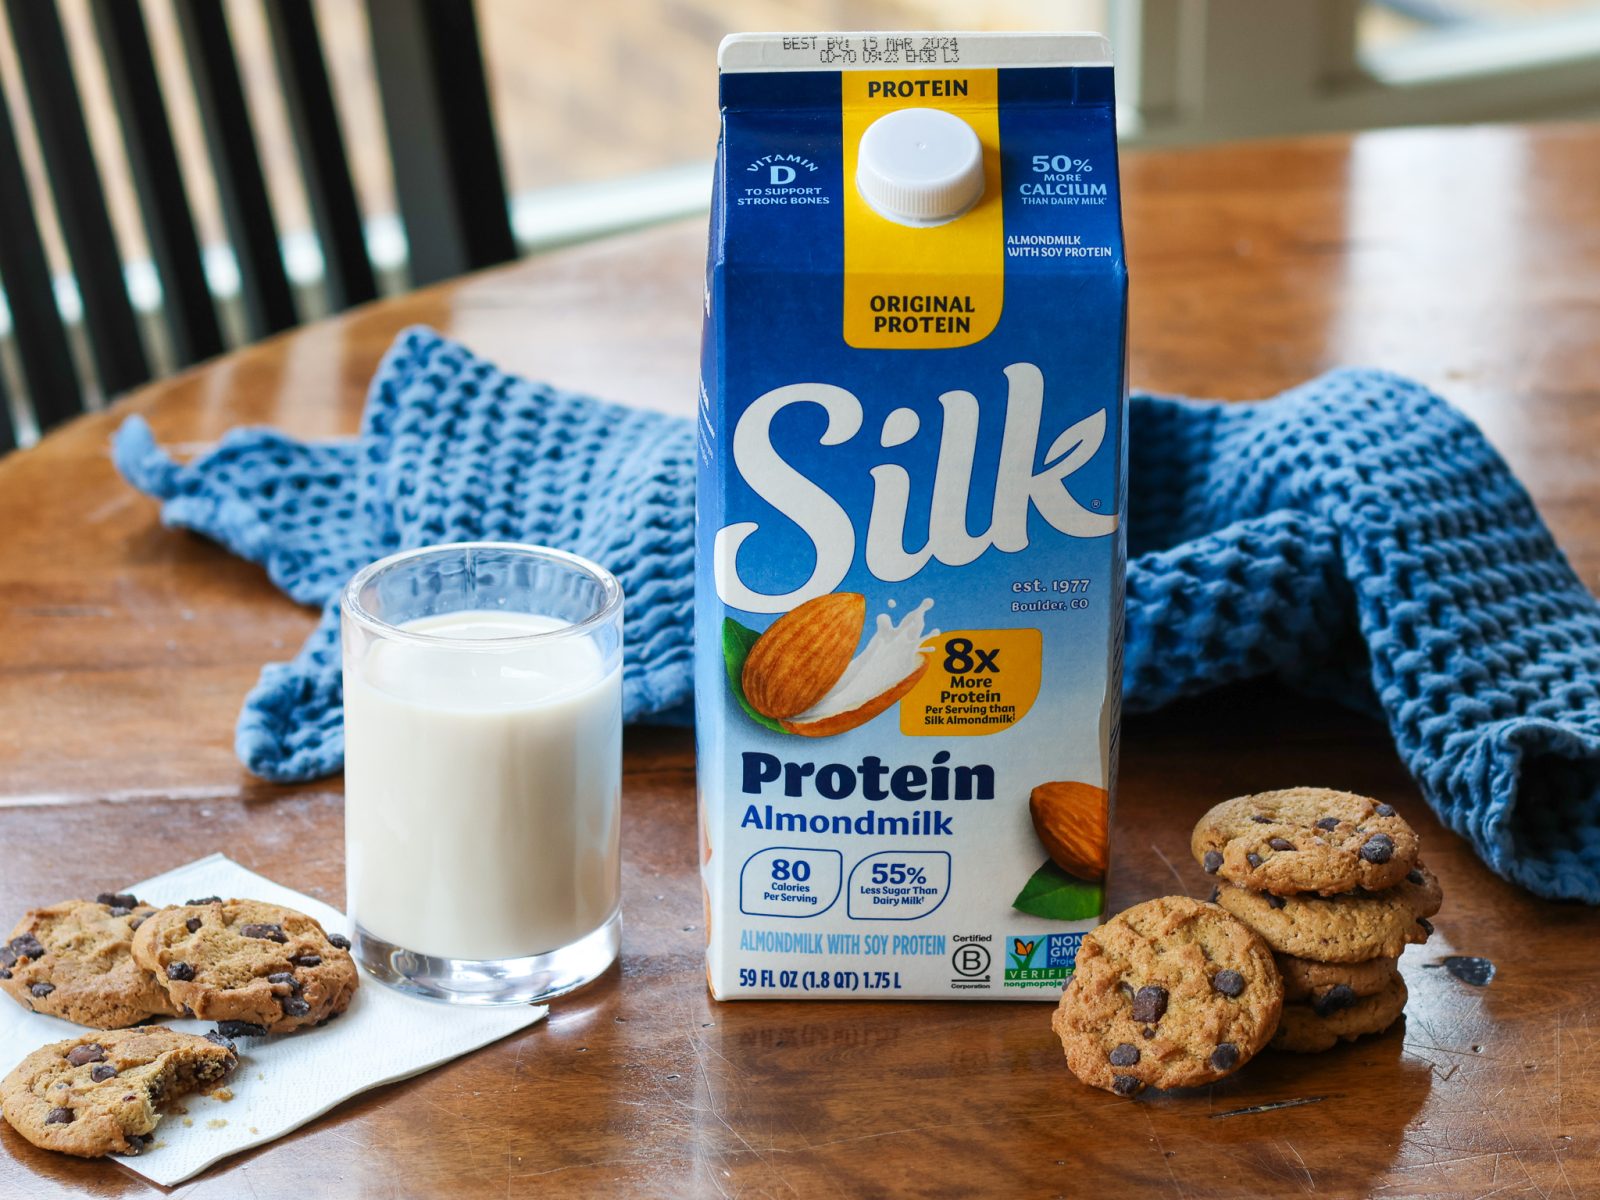 Grab Silk Protein Almondmilk For As Low As $2.99 At Kroger